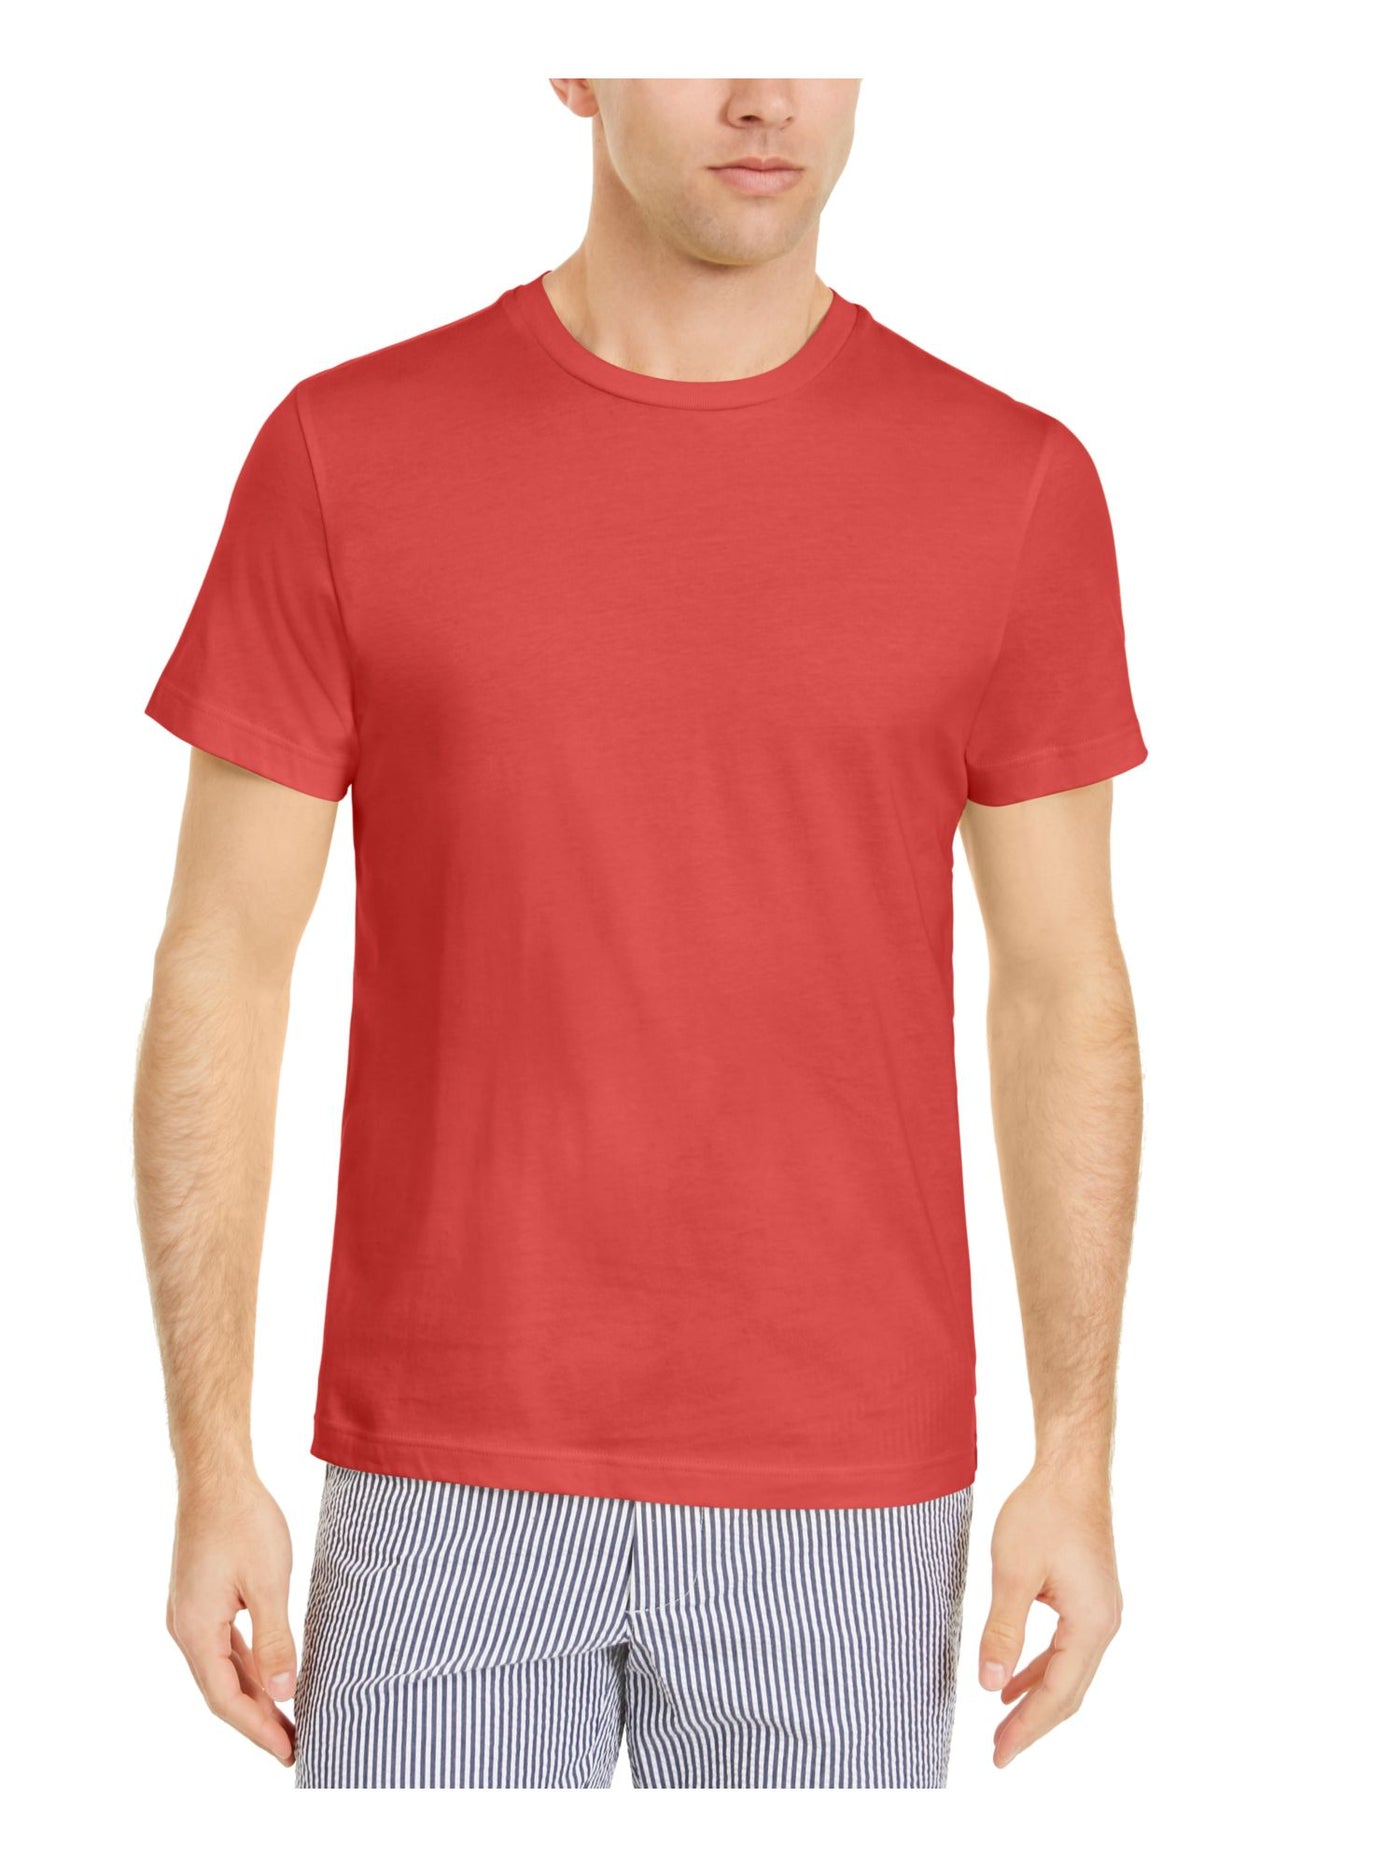 CLUBROOM Mens Red Classic Fit T-Shirt L